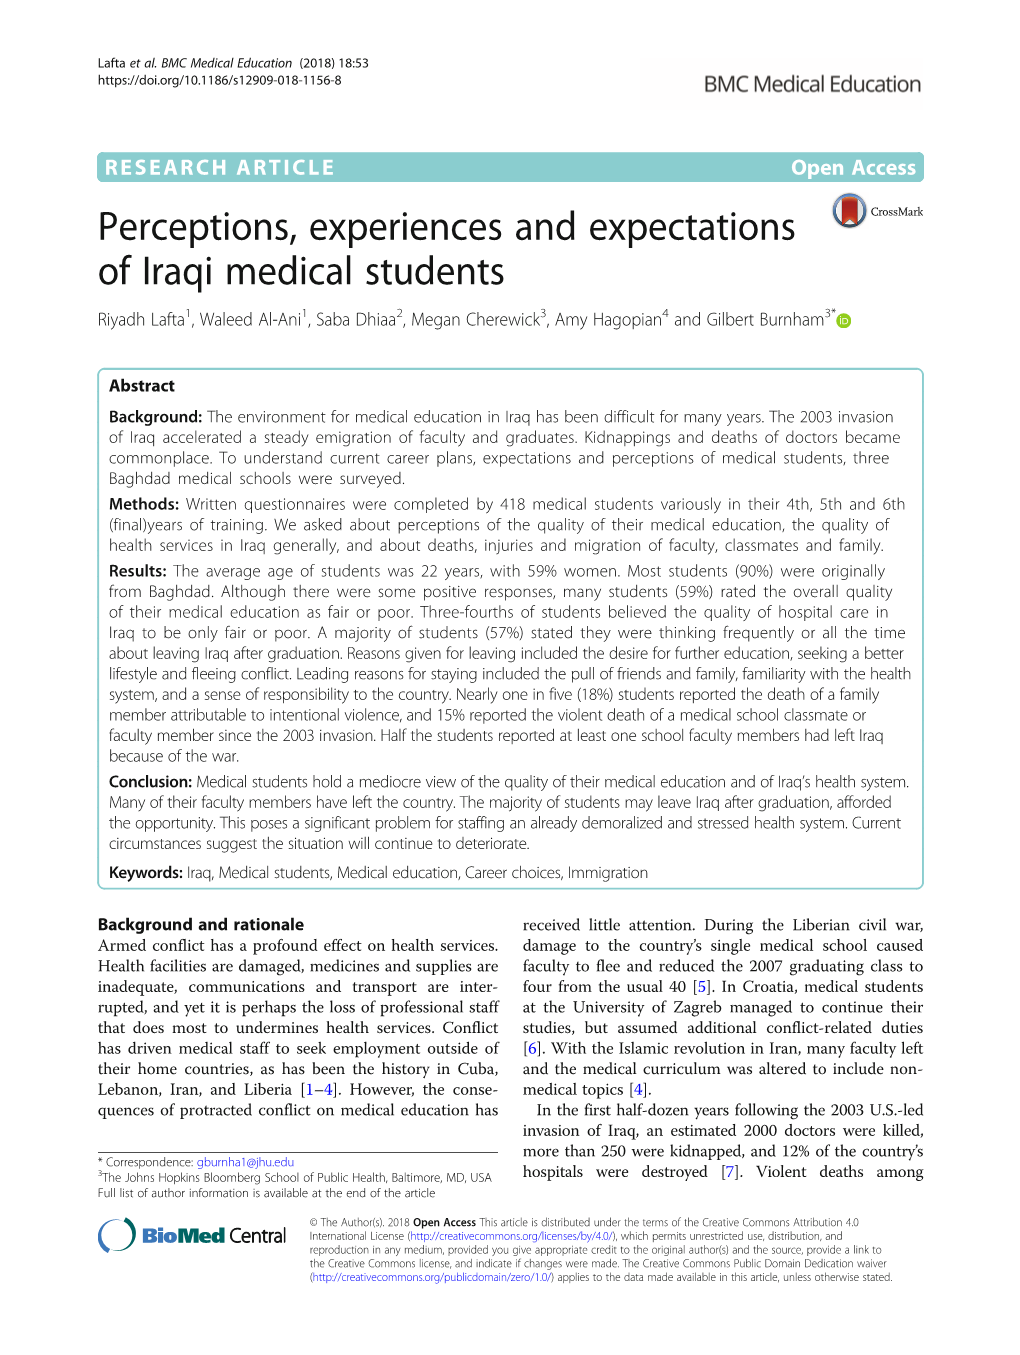 Perceptions, Experiences and Expectations of Iraqi Medical Students Riyadh Lafta1, Waleed Al-Ani1, Saba Dhiaa2, Megan Cherewick3, Amy Hagopian4 and Gilbert Burnham3*